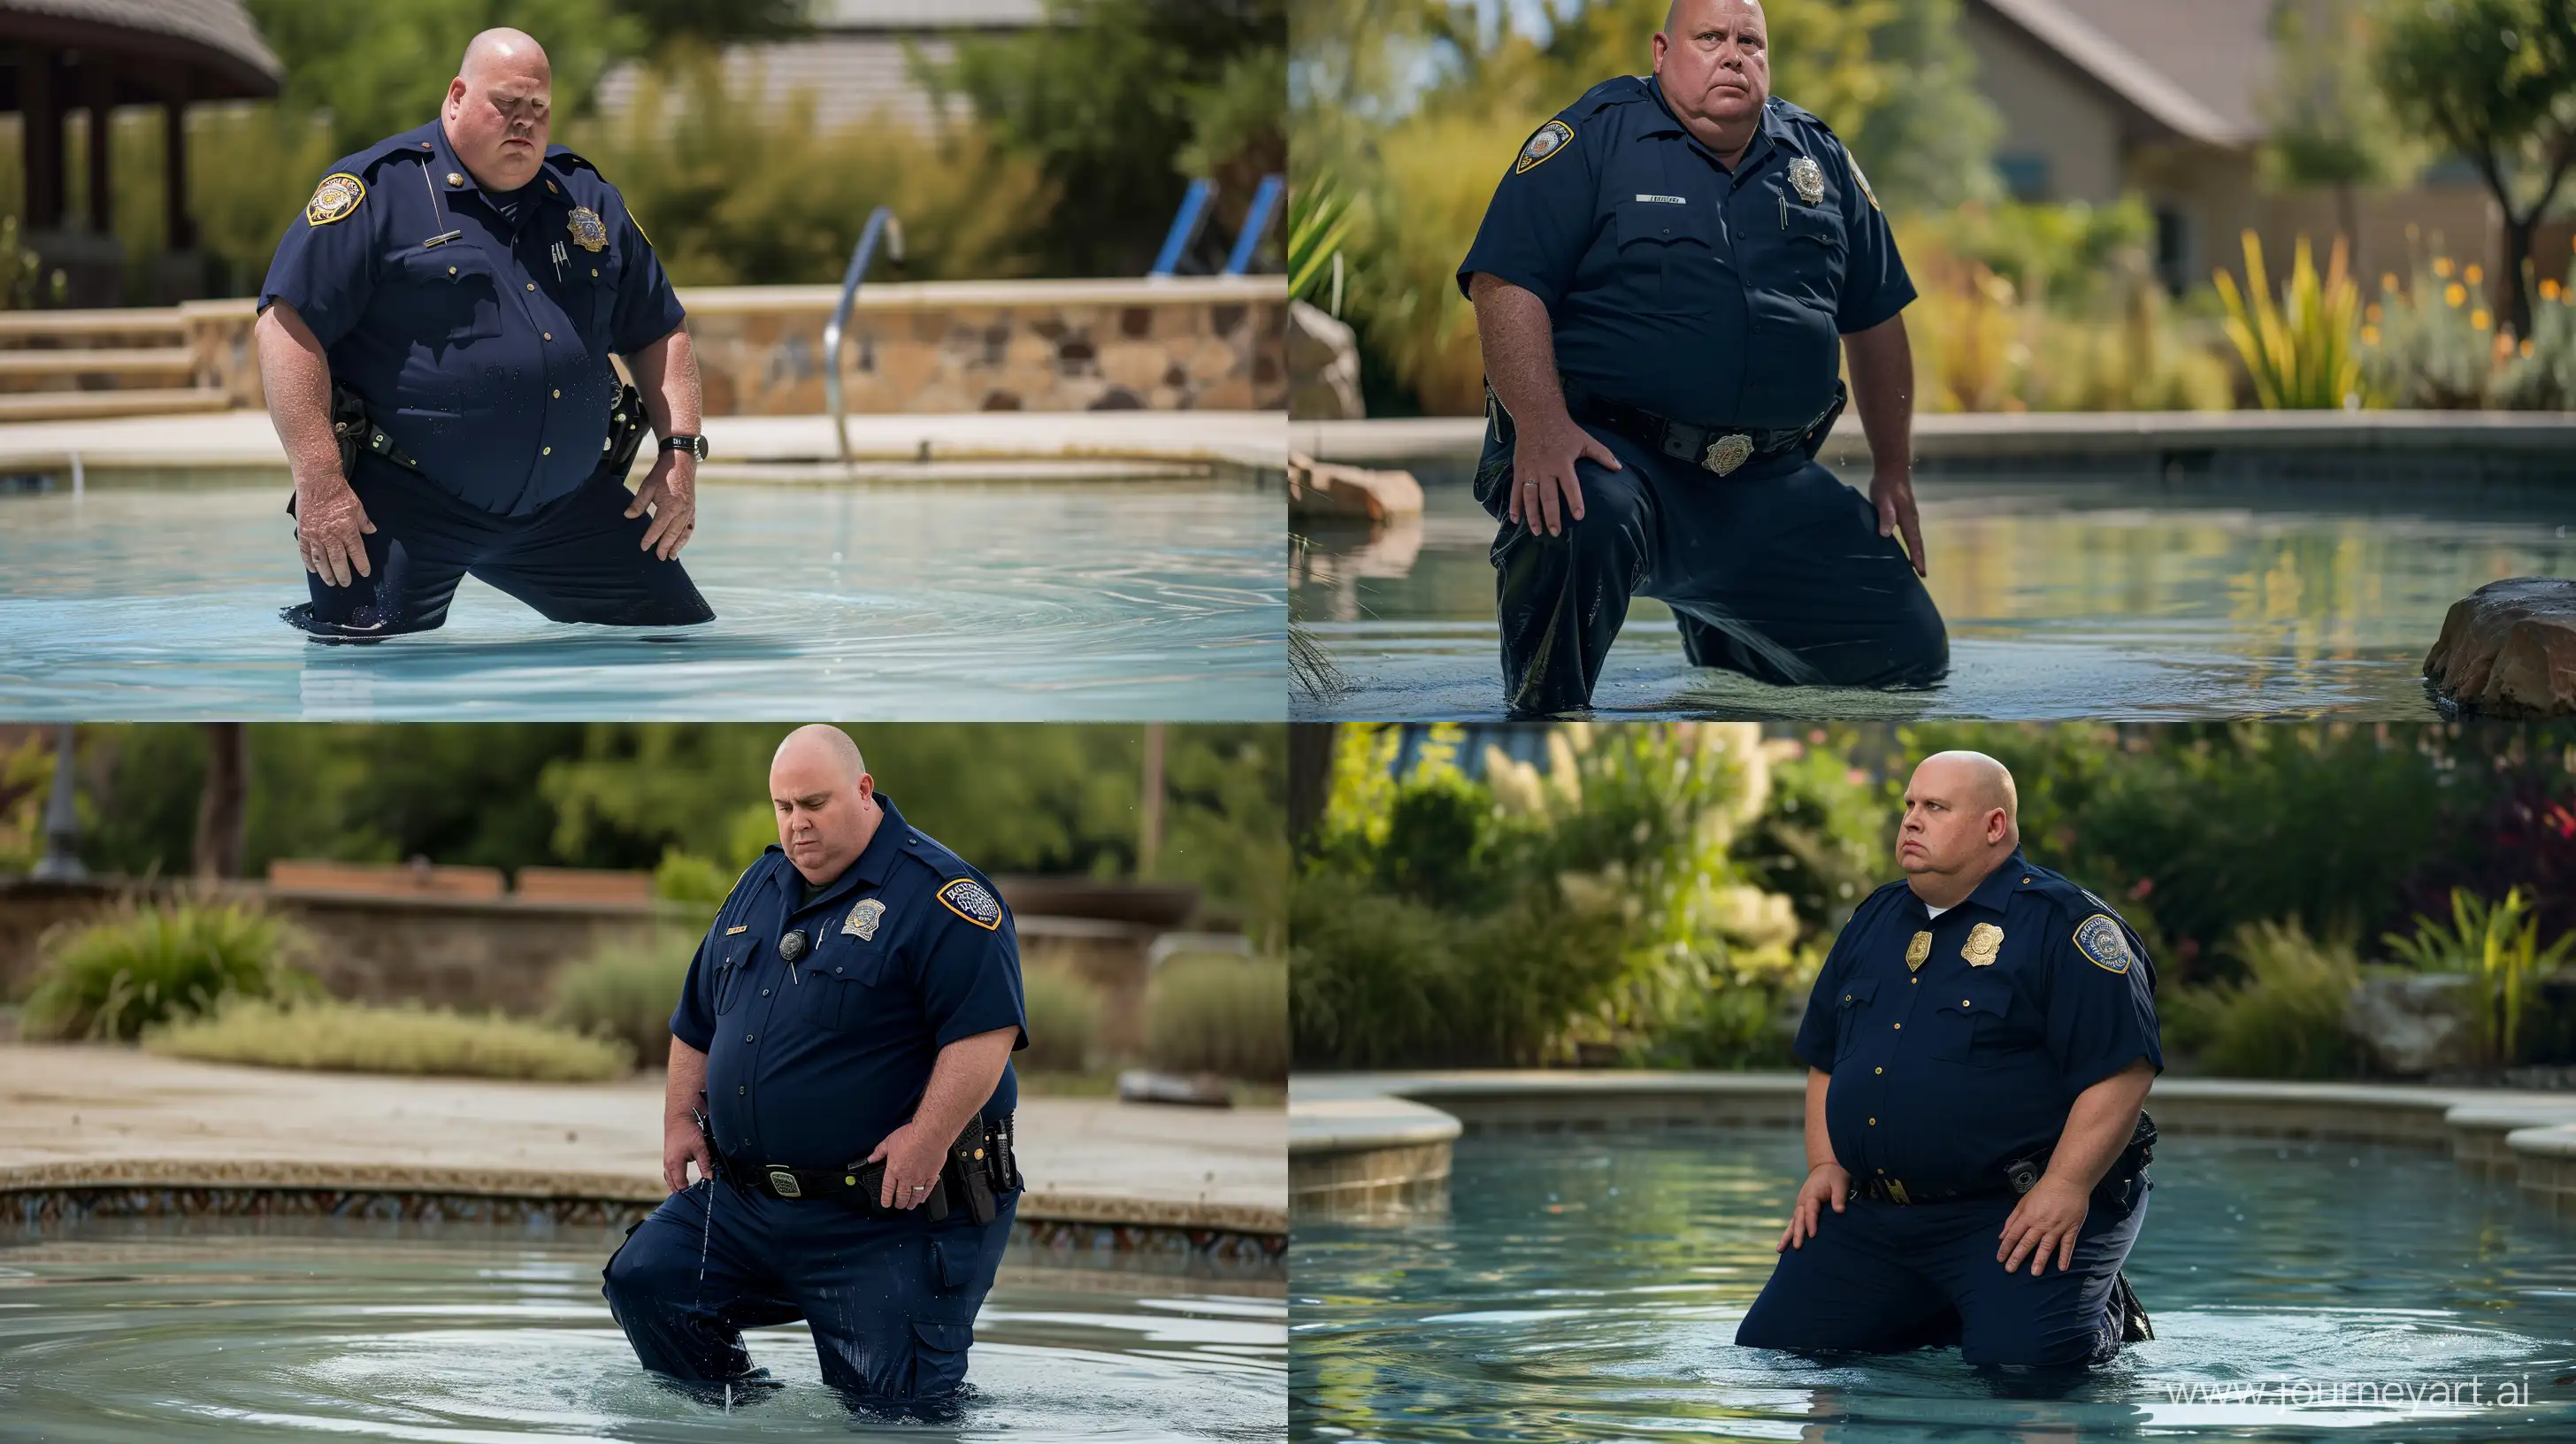 Senior-Policeman-Kneeling-in-Shallow-Pool-Outdoor-HighResolution-Image